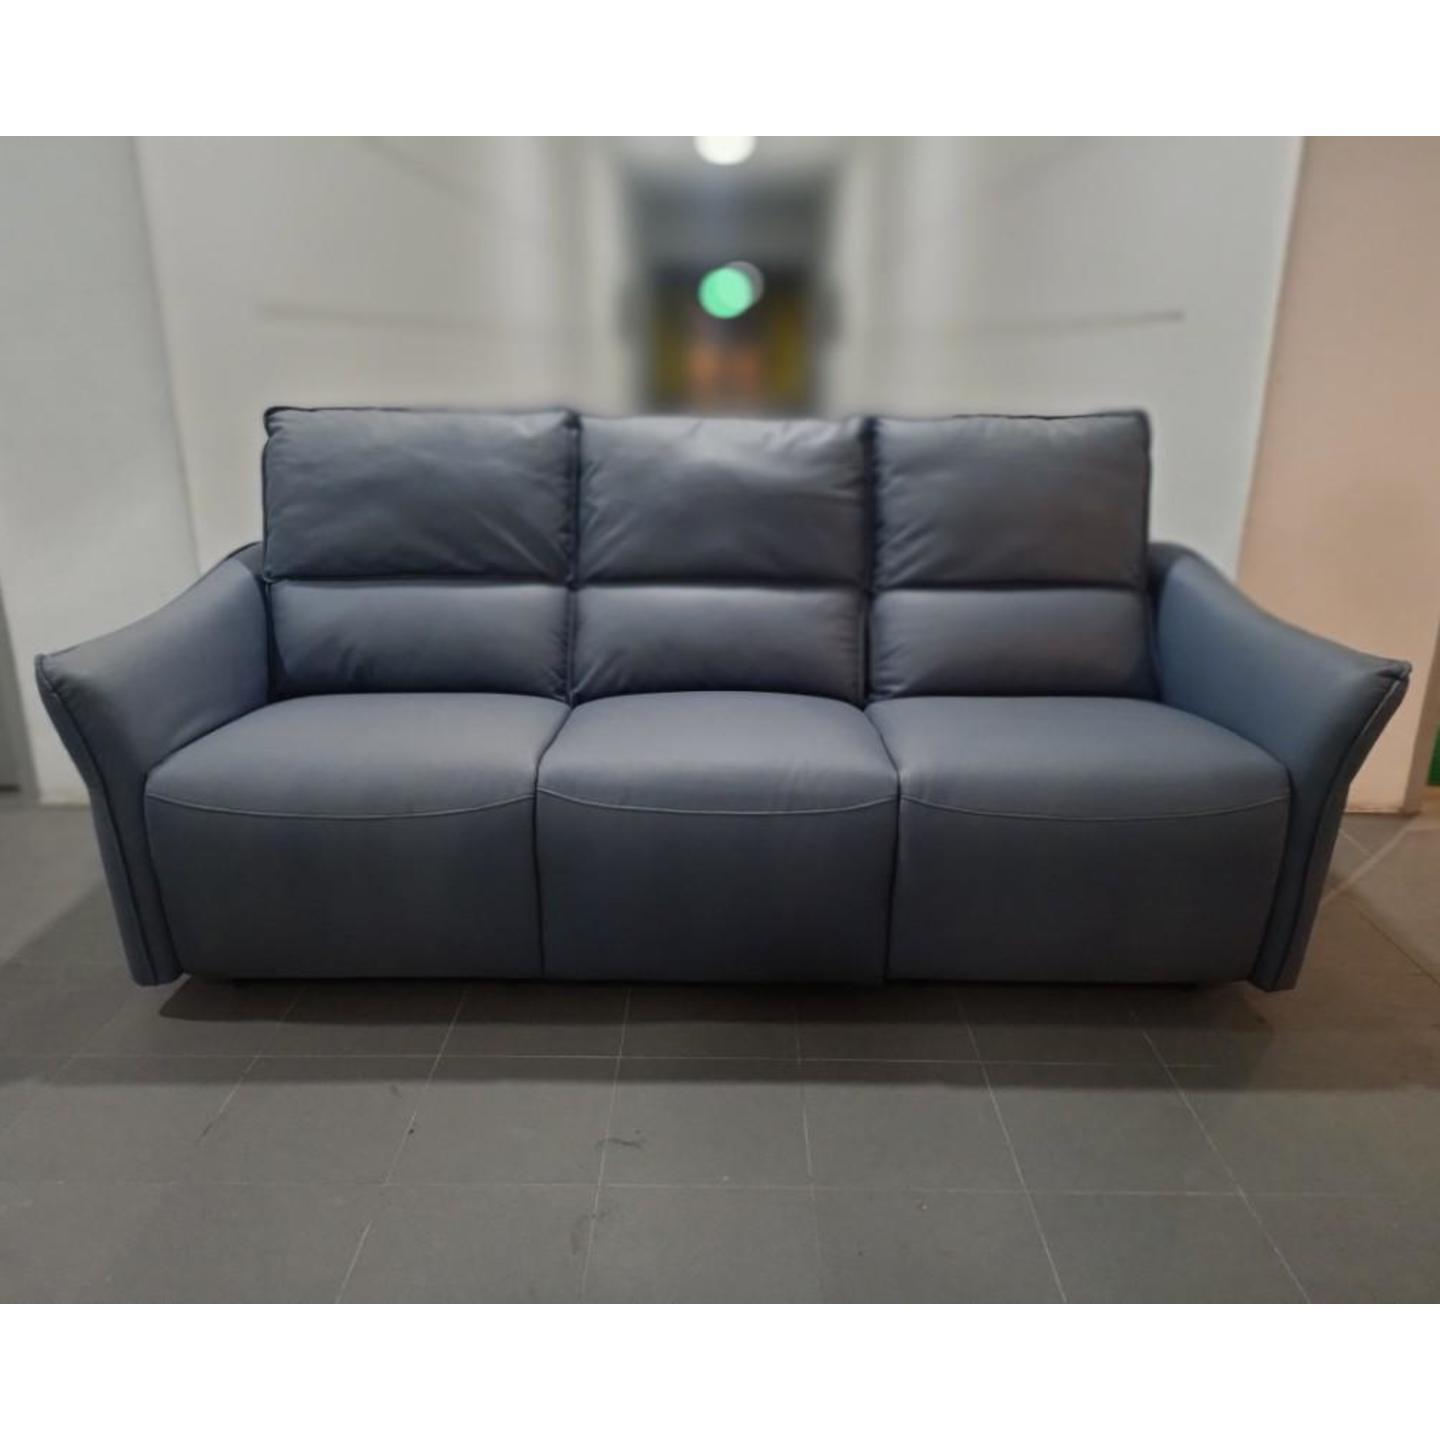 REVLONA 3 Seater Recliner Sofa in BLUE Leatheraire - EX DISPLAY